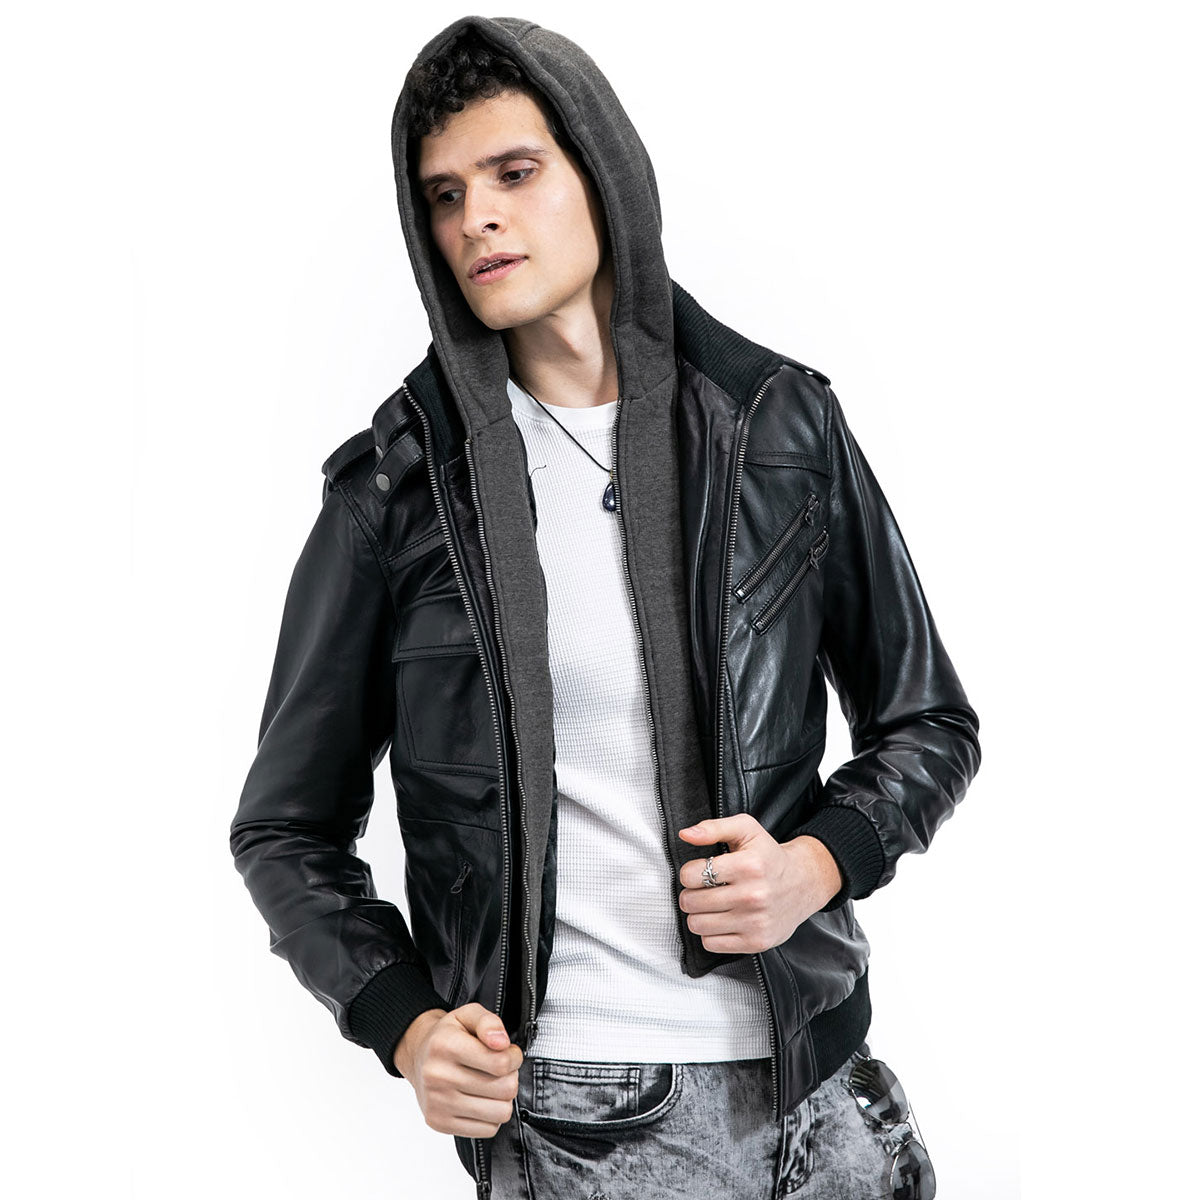 TLC Fashion Men's Leather Jacket with Hood - Stylish Leather Bomber Jacket for Men